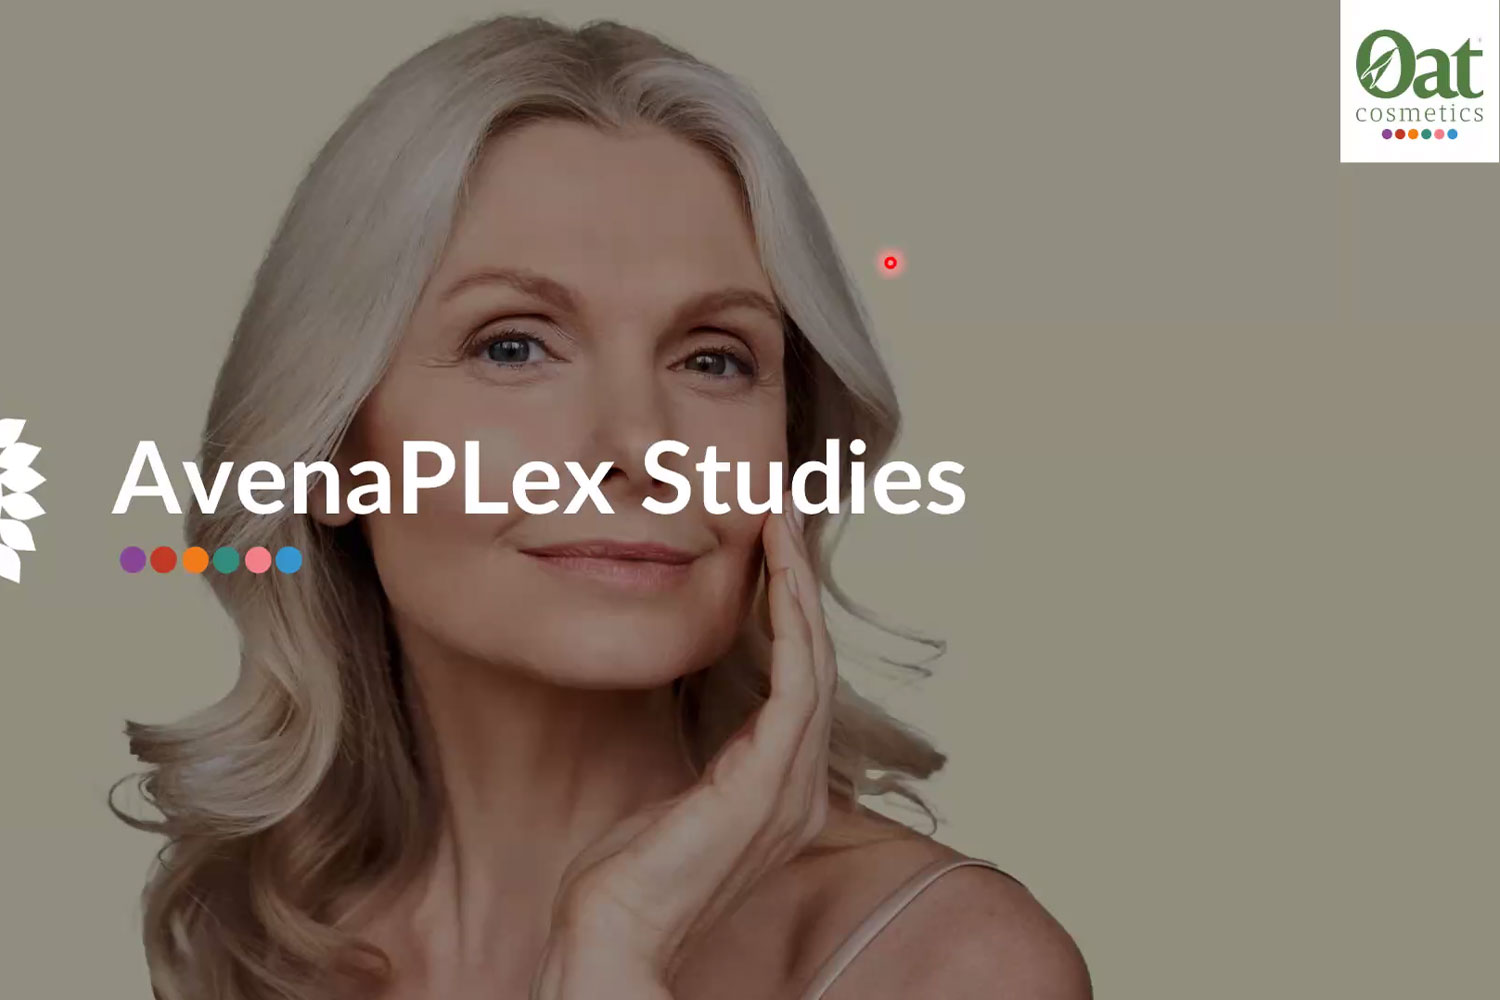 AvenaPLex Oat Cosmetics ProTec Ingredia